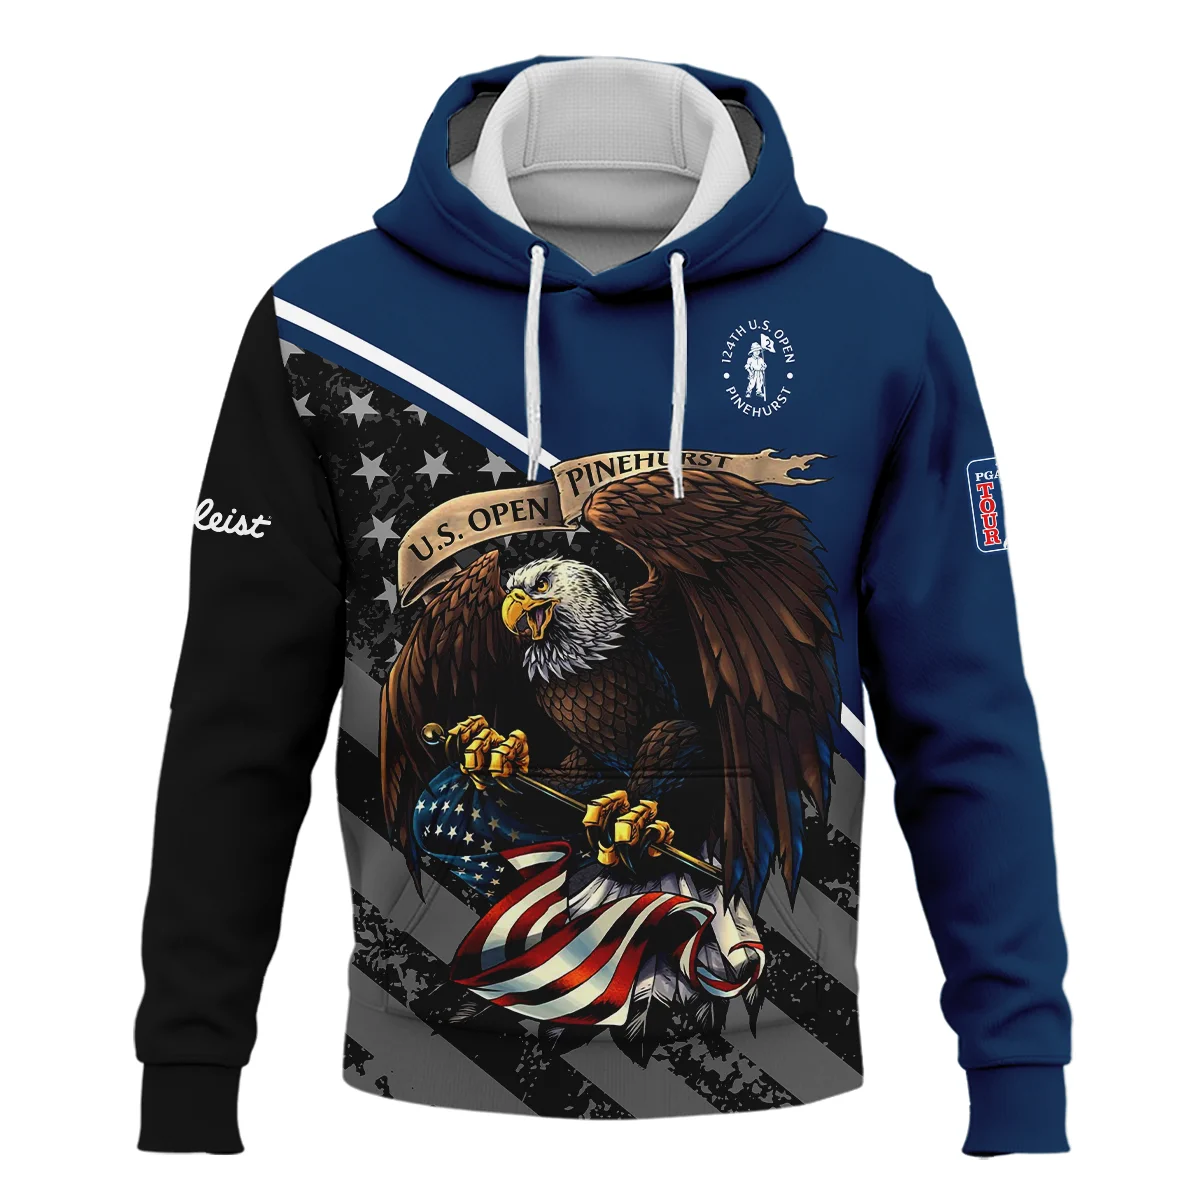 Special Version 124th U.S. Open Pinehurst Titleist Sleeveless Jacket Color Blue Eagle USA  Sleeveless Jacket